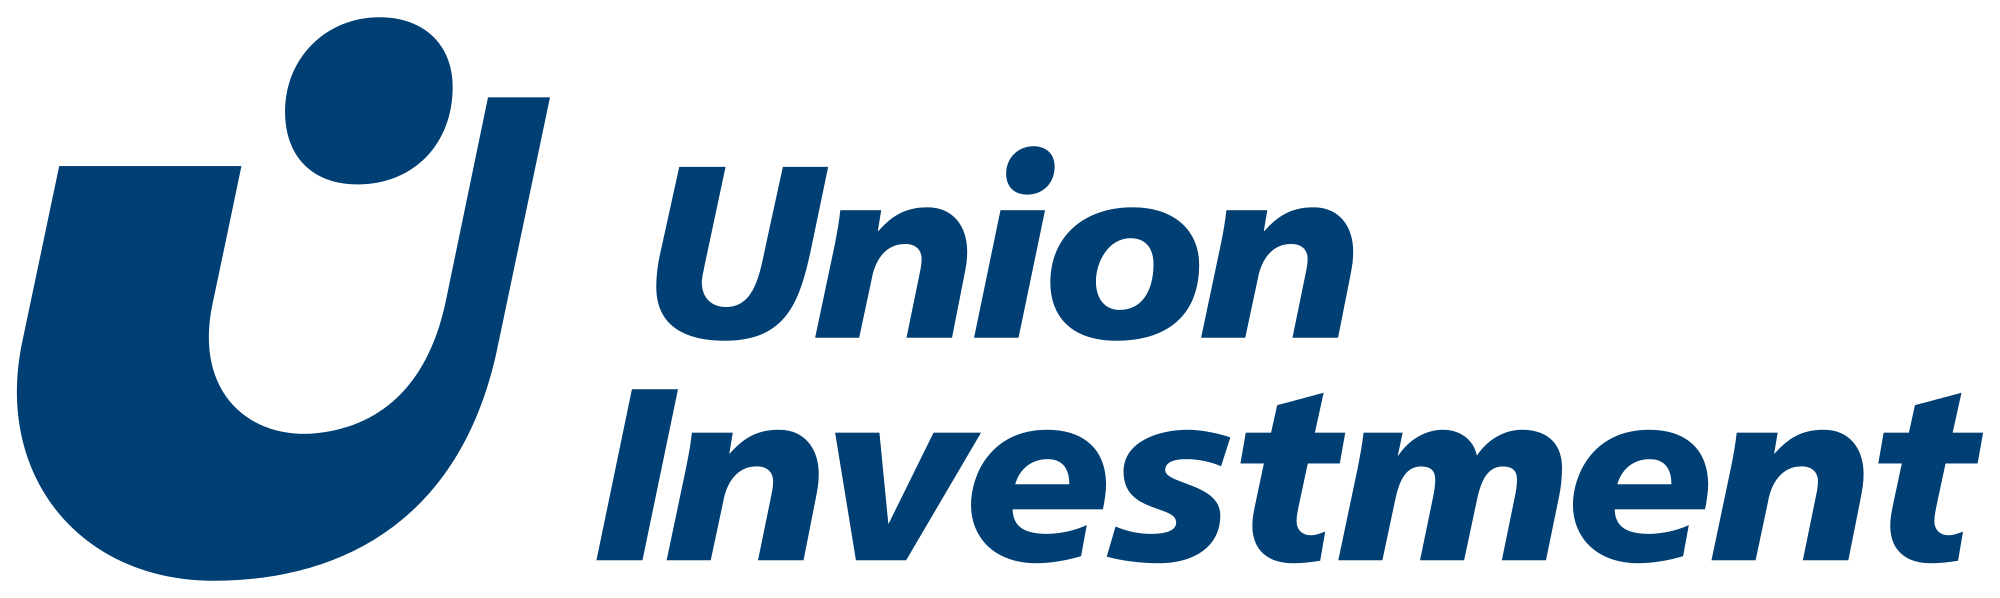 Union Asset Management Holding Brand Logo